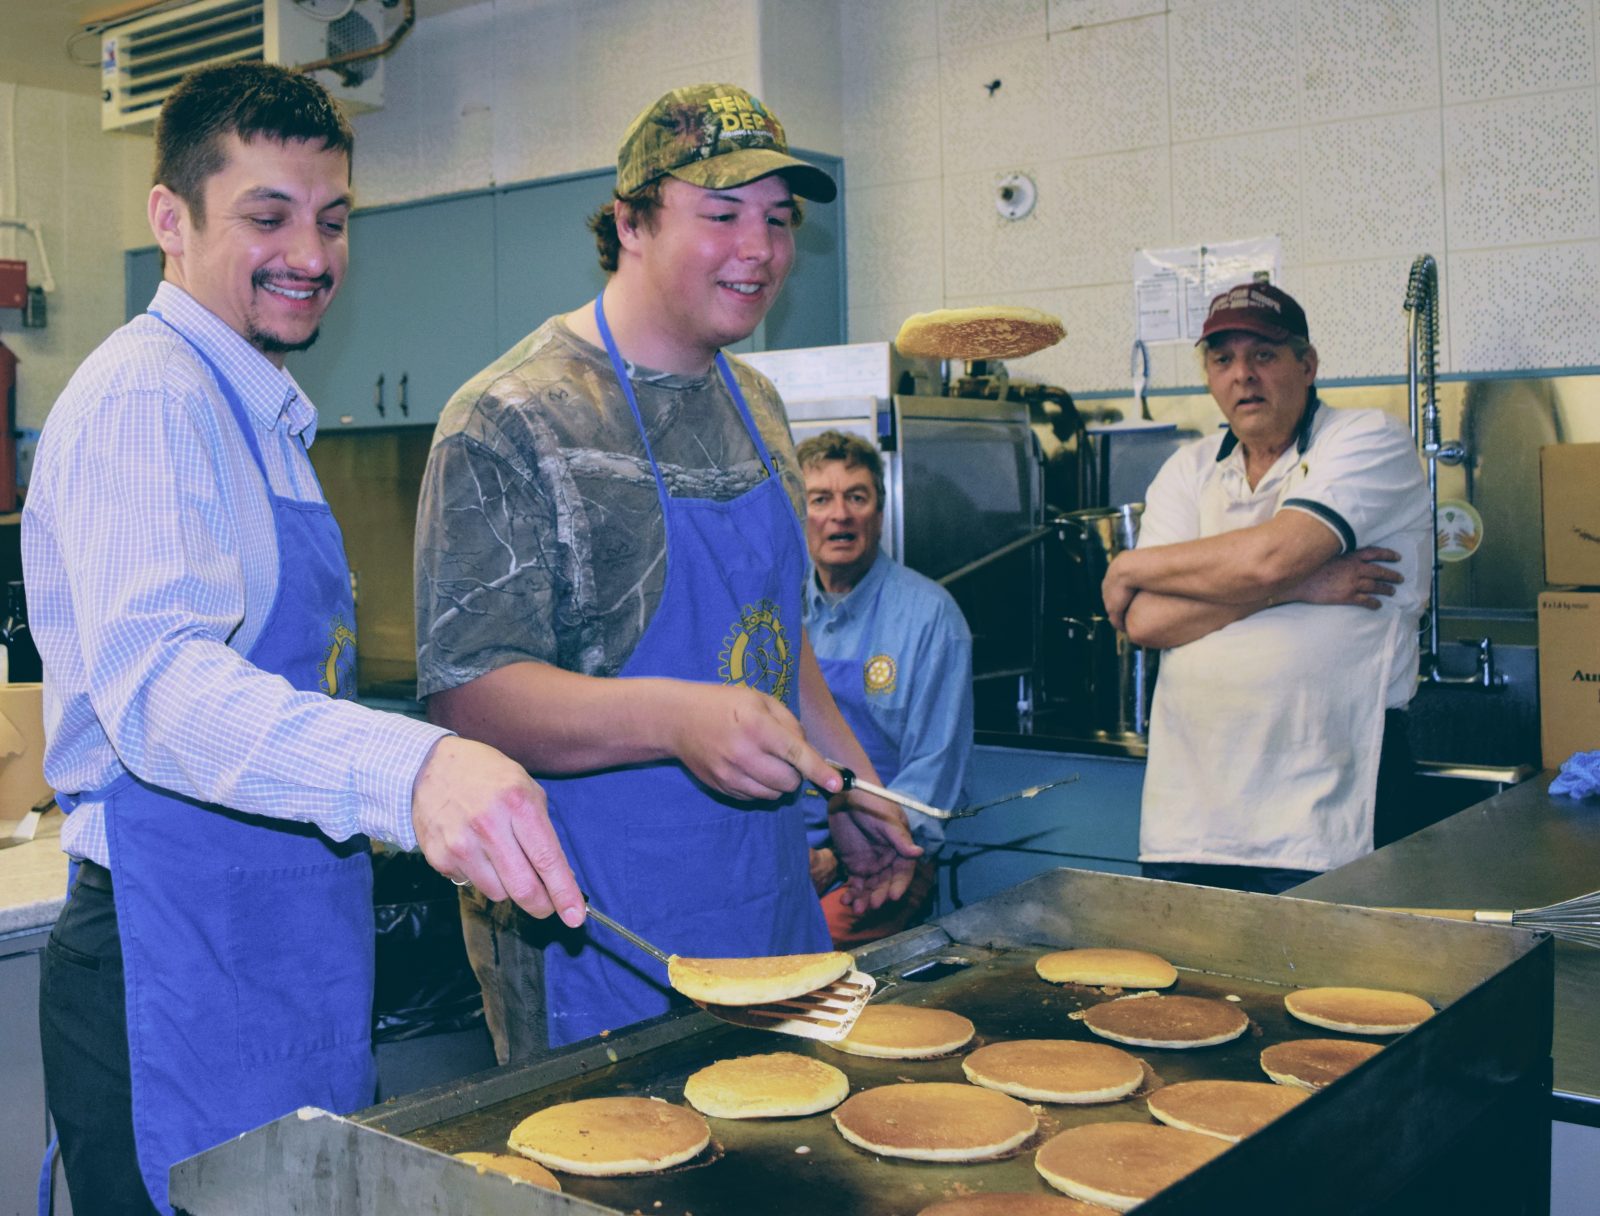 Pancake Day serves up community sweetness